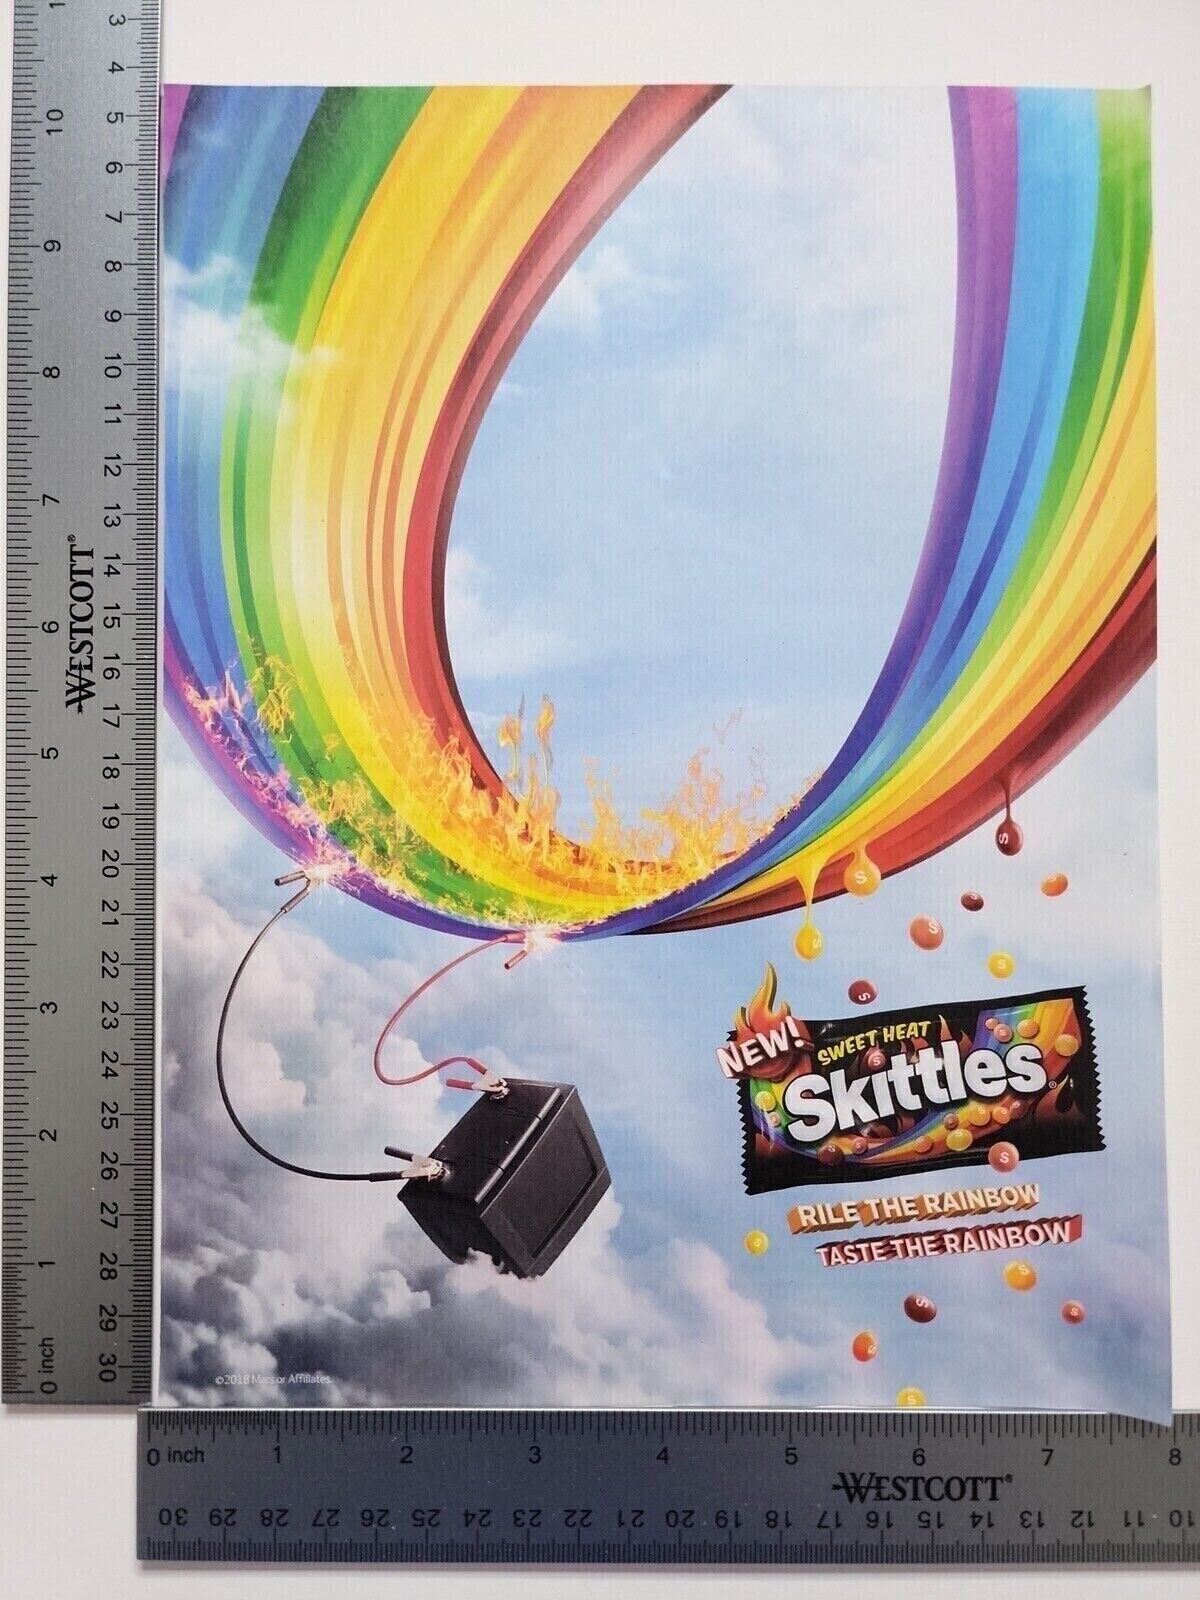 Sweet Heat Skittles Advertisement Original Print Ad / Poster Promo Art